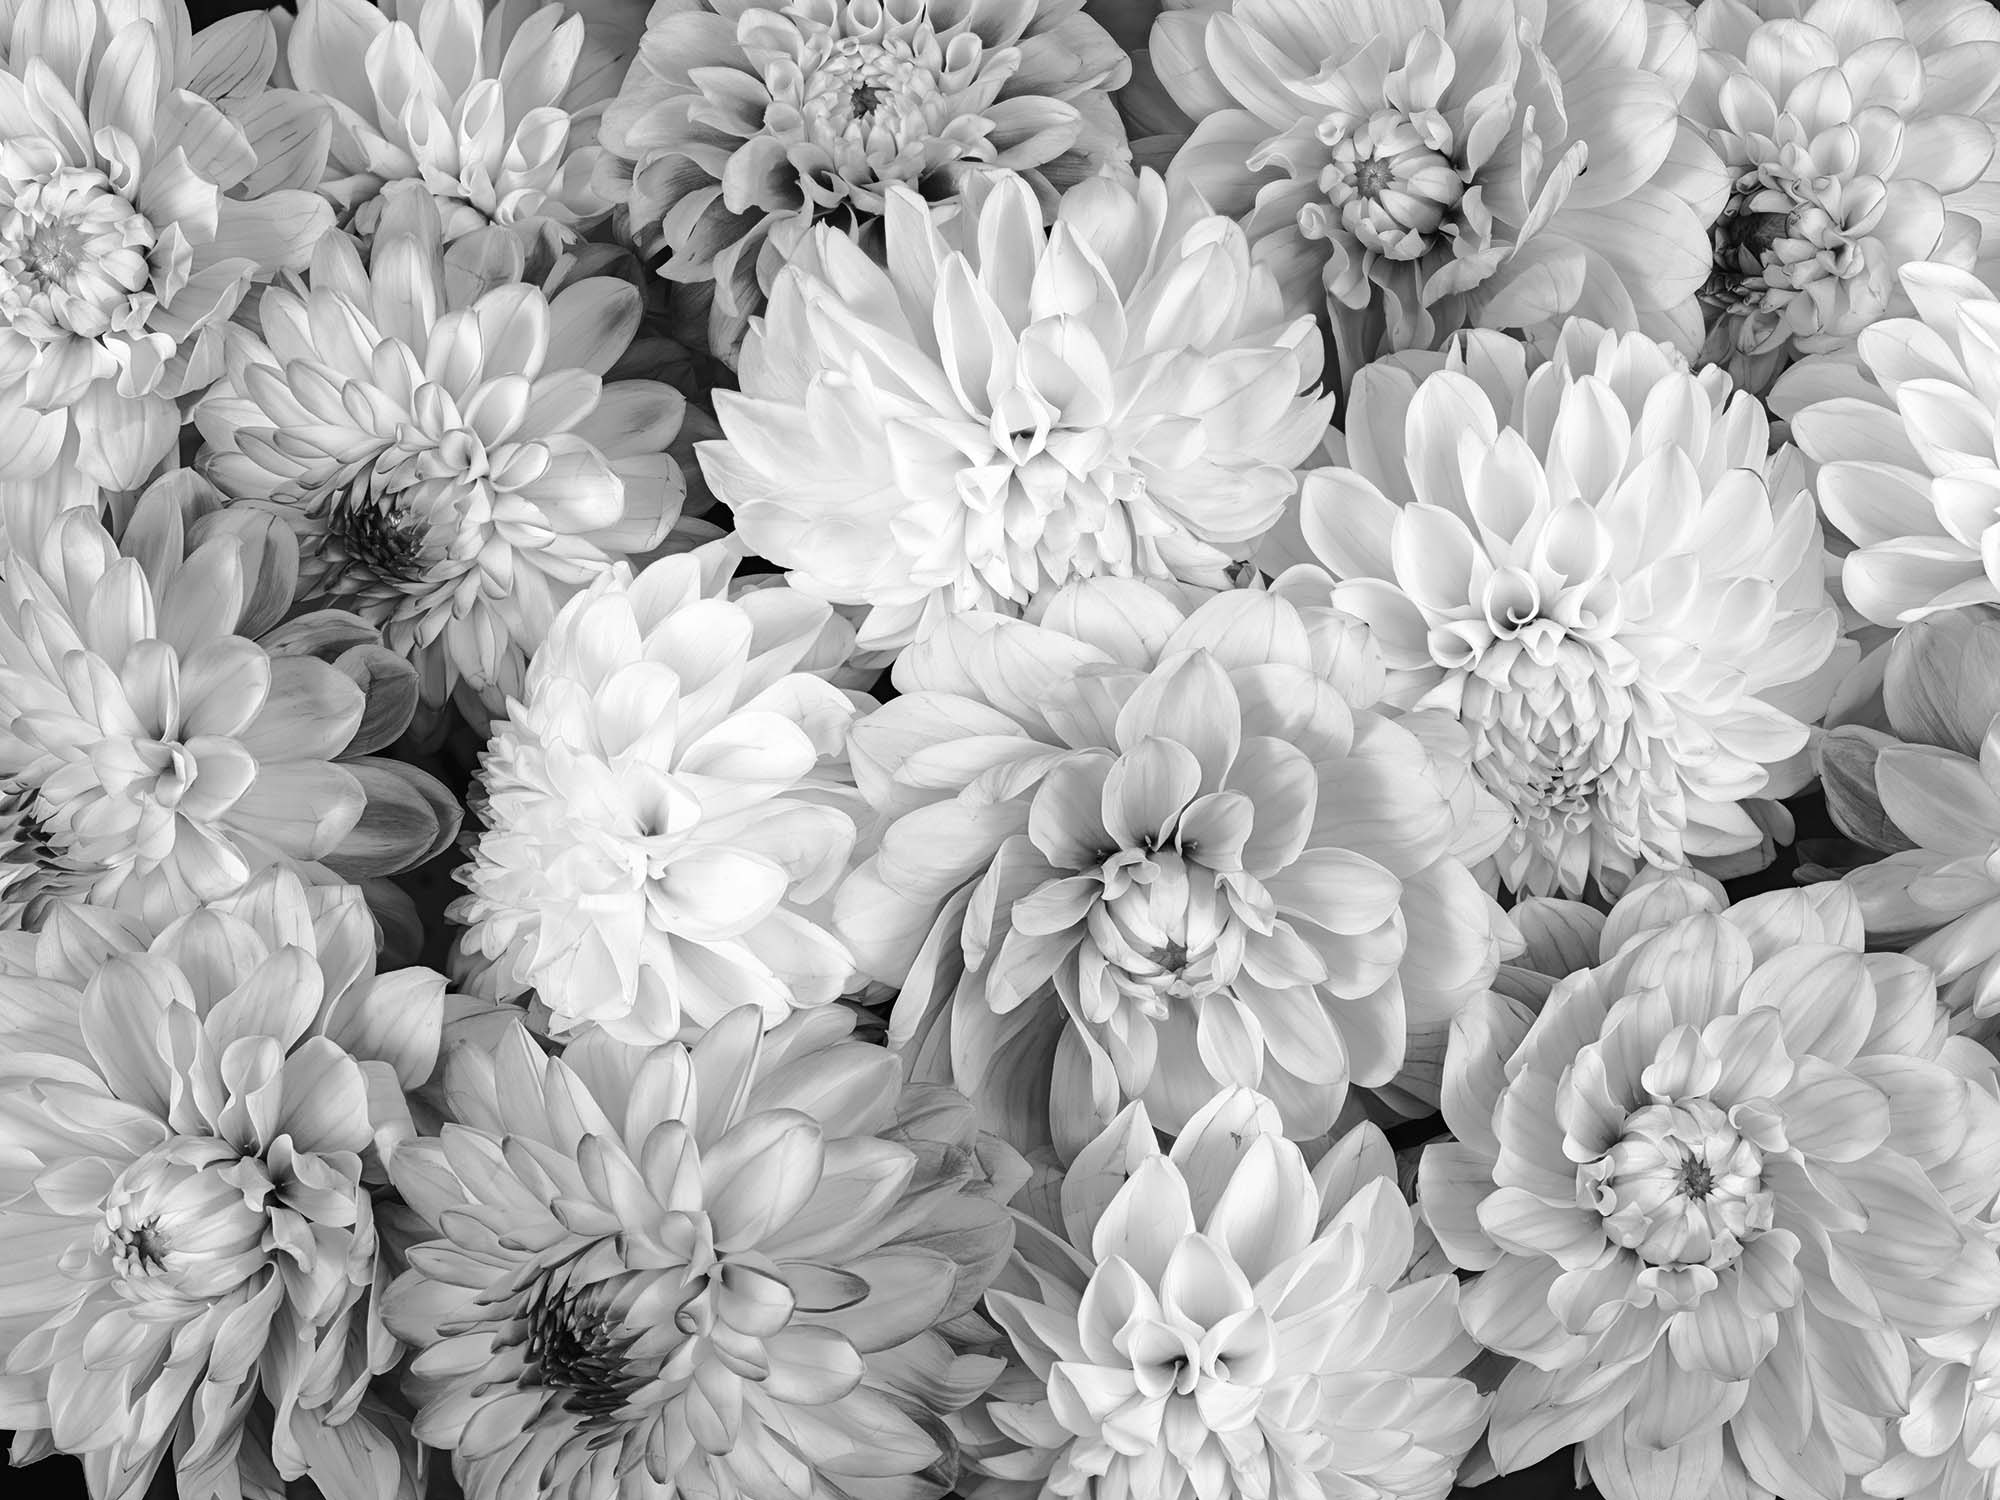 Dahlia Flowers (Black and White)